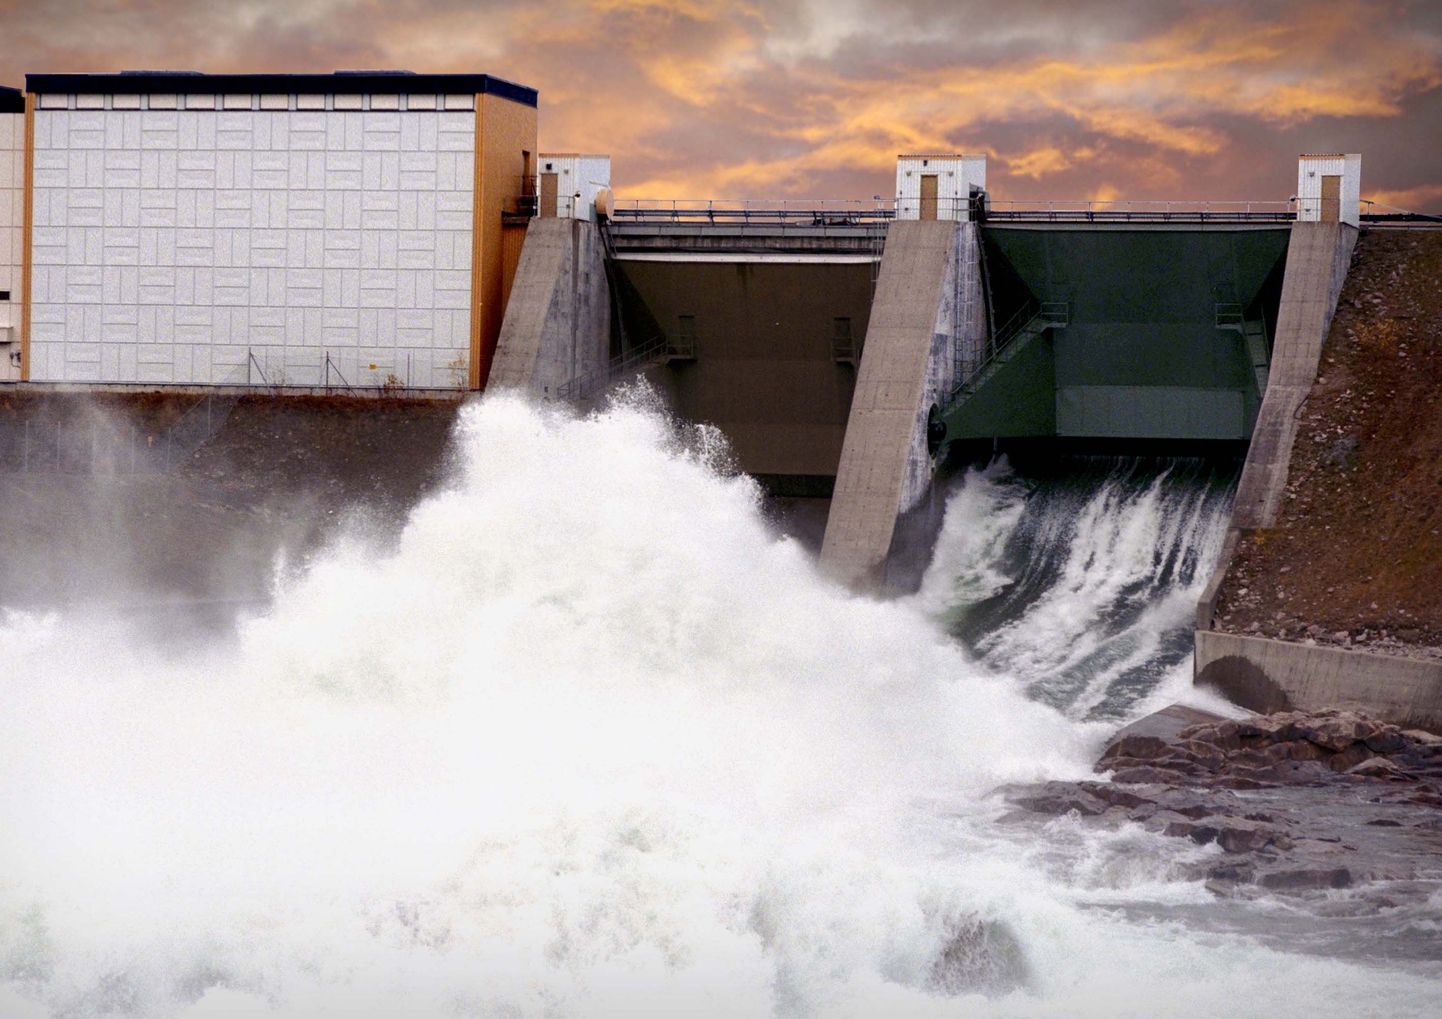 Pildil hüdroelektrijaam Rootsis Porjusis.